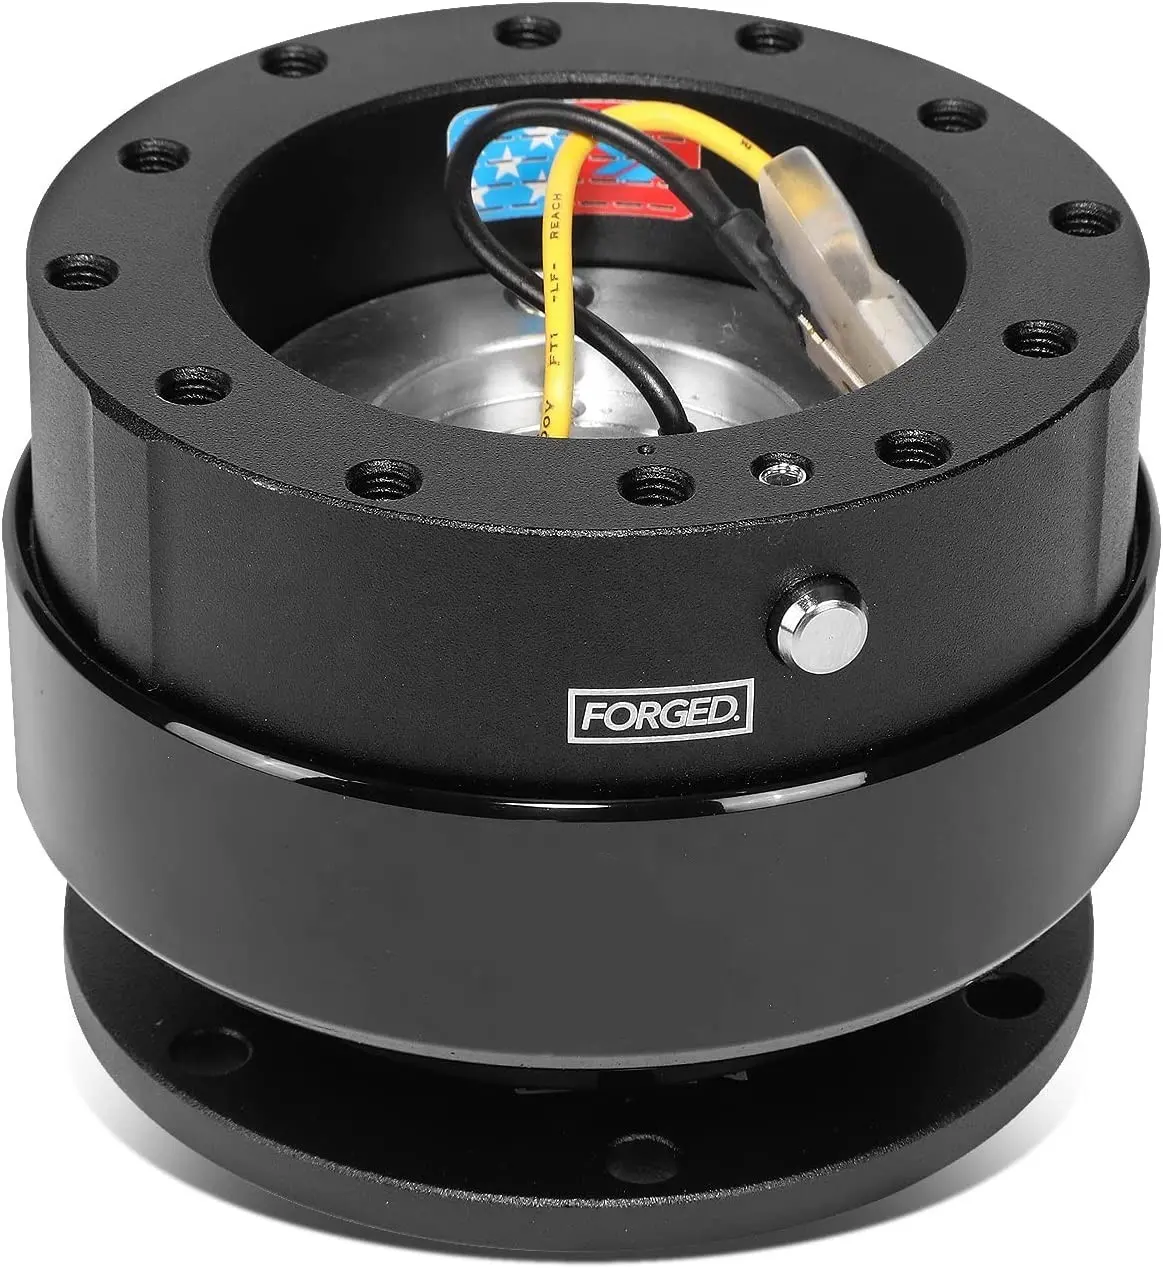 JDM Racing Culture Aluminum Racing Steering Wheel Adapter Hub (Black Body/Black Ring)Quick Release Boss Kit